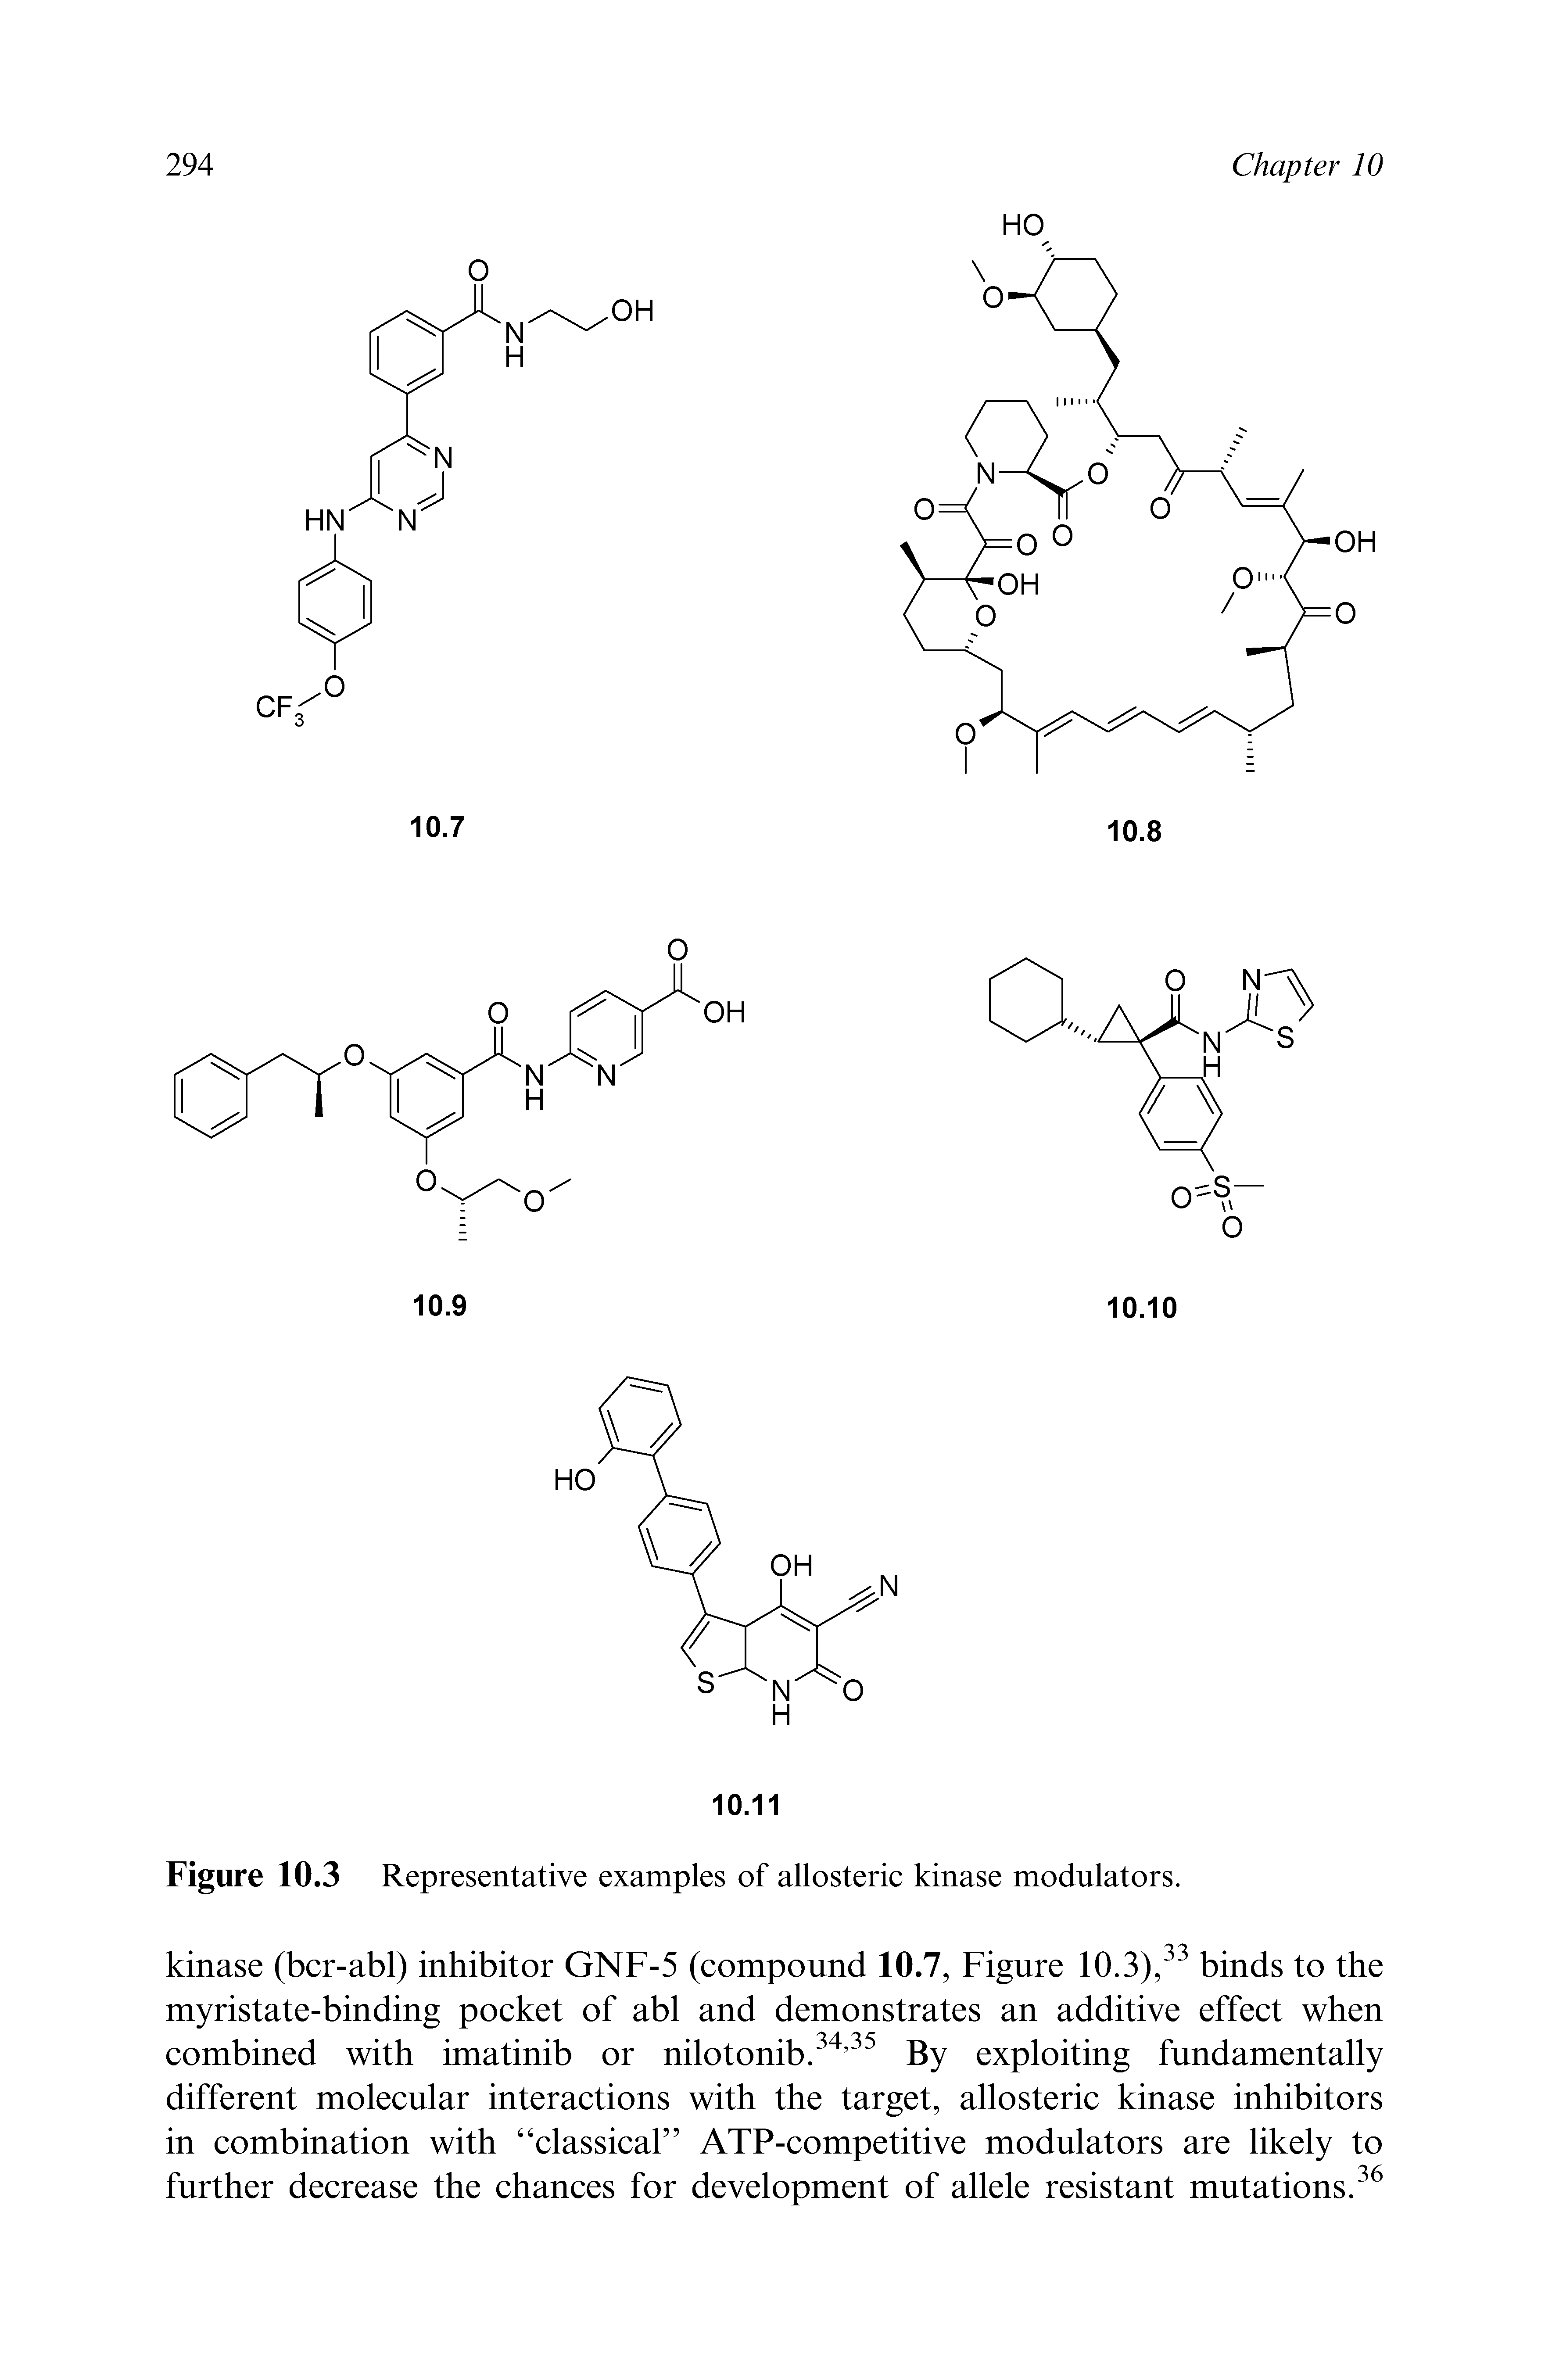 Figure 10.3 Representative examples of allosteric kinase modulators.